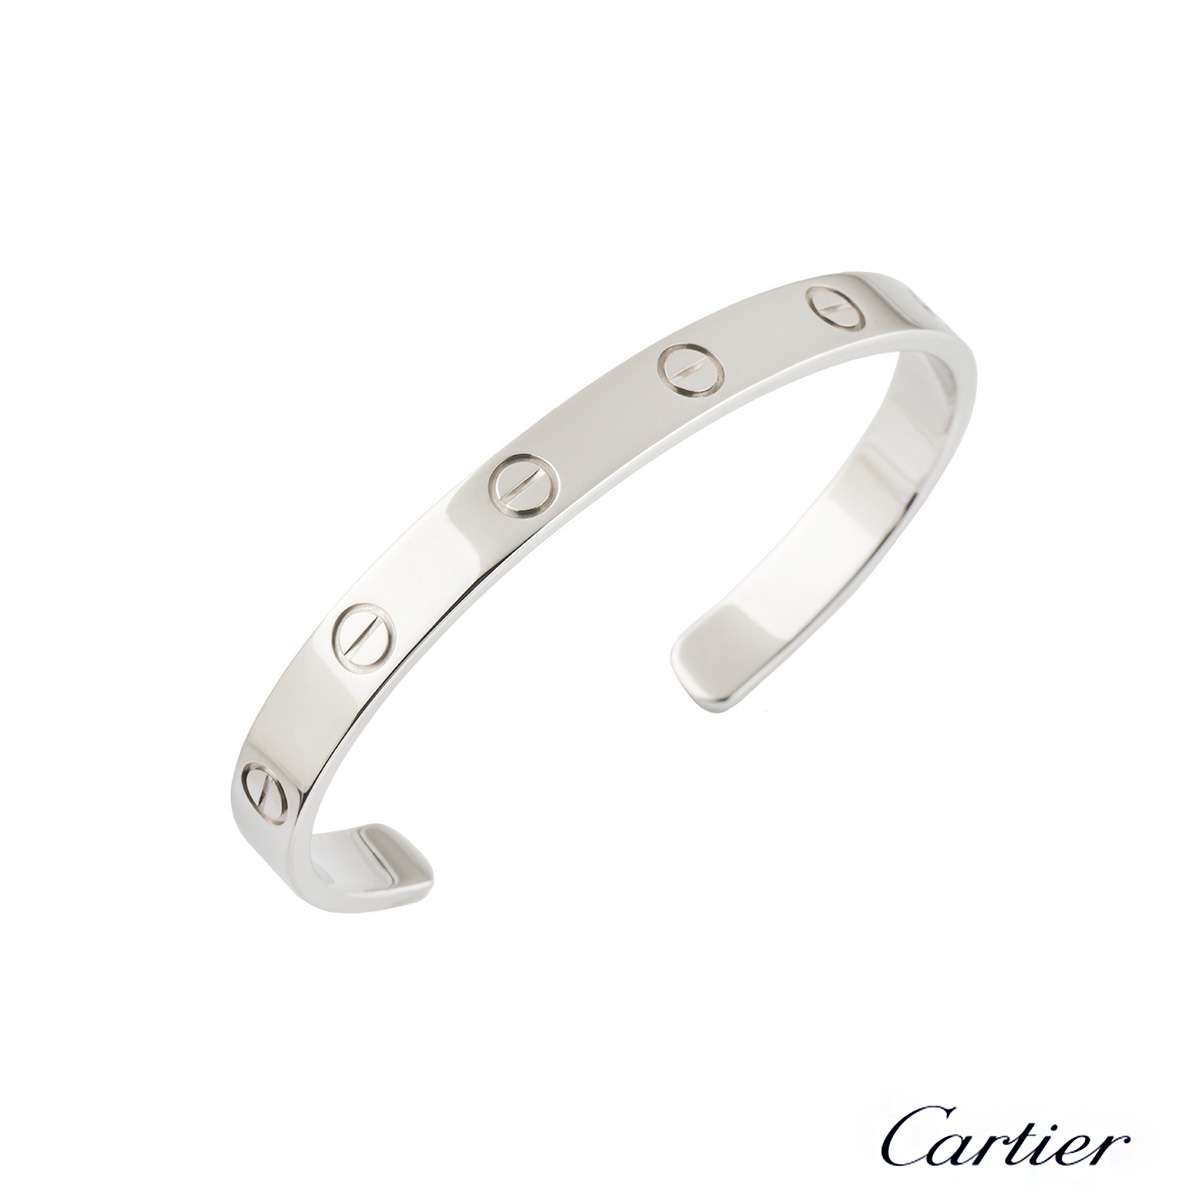 cartier cuff or bracelet